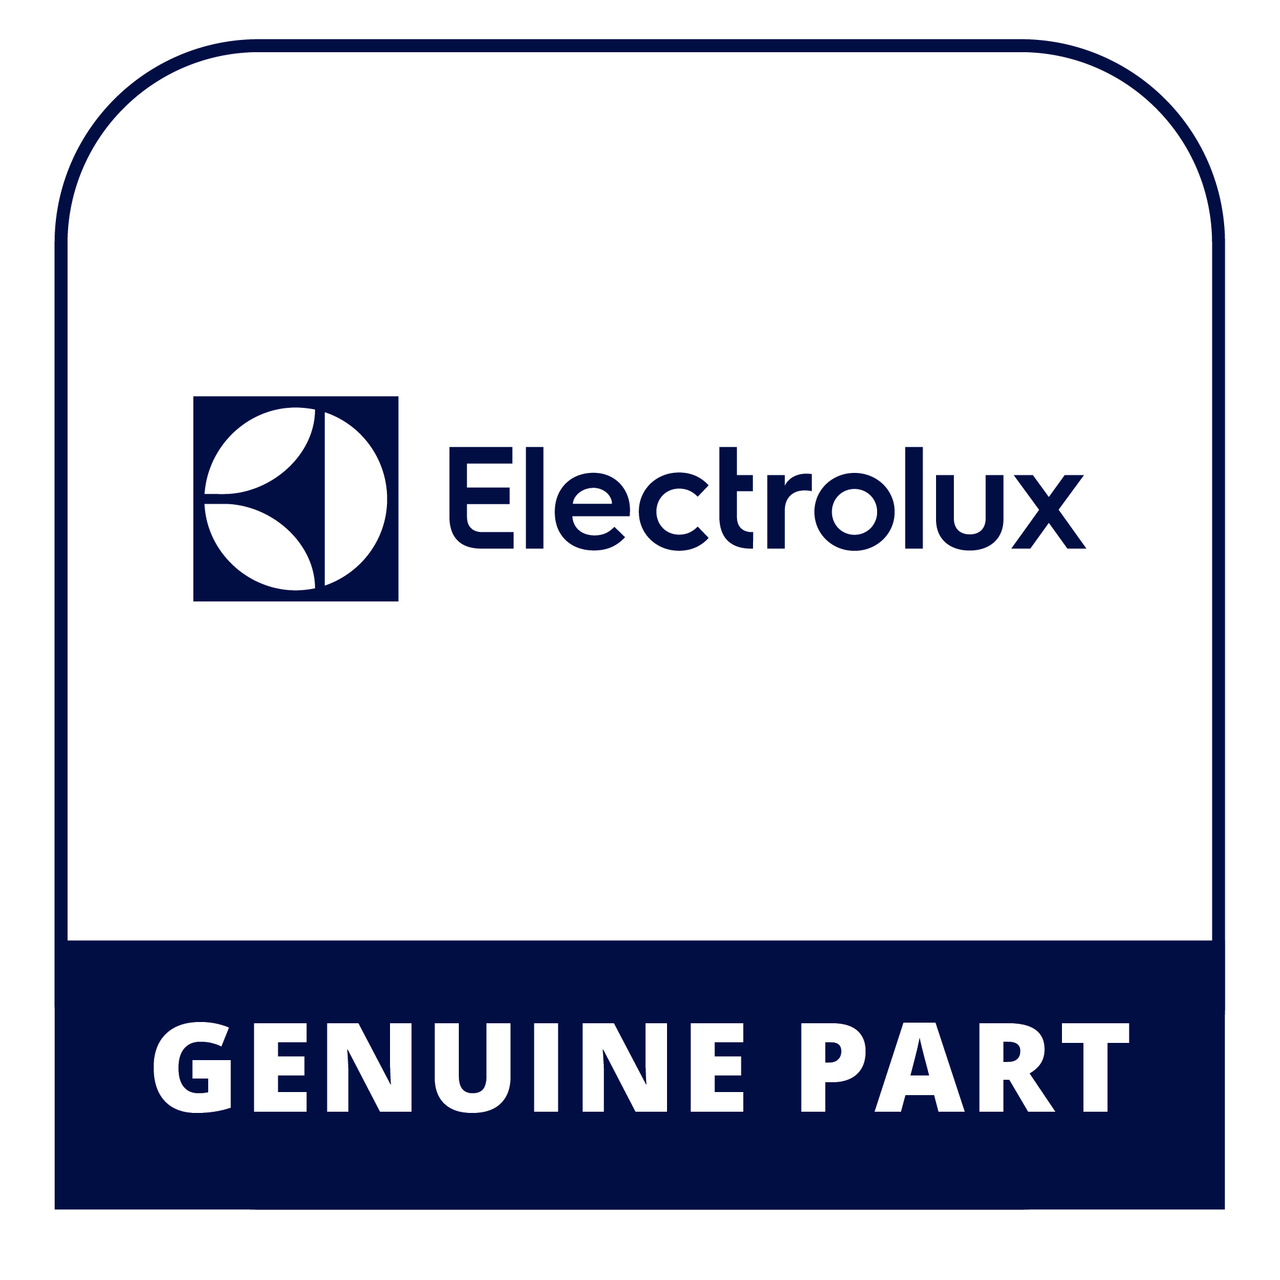 Frigidaire - Electrolux 5304464067 Panel - Genuine Electrolux Part